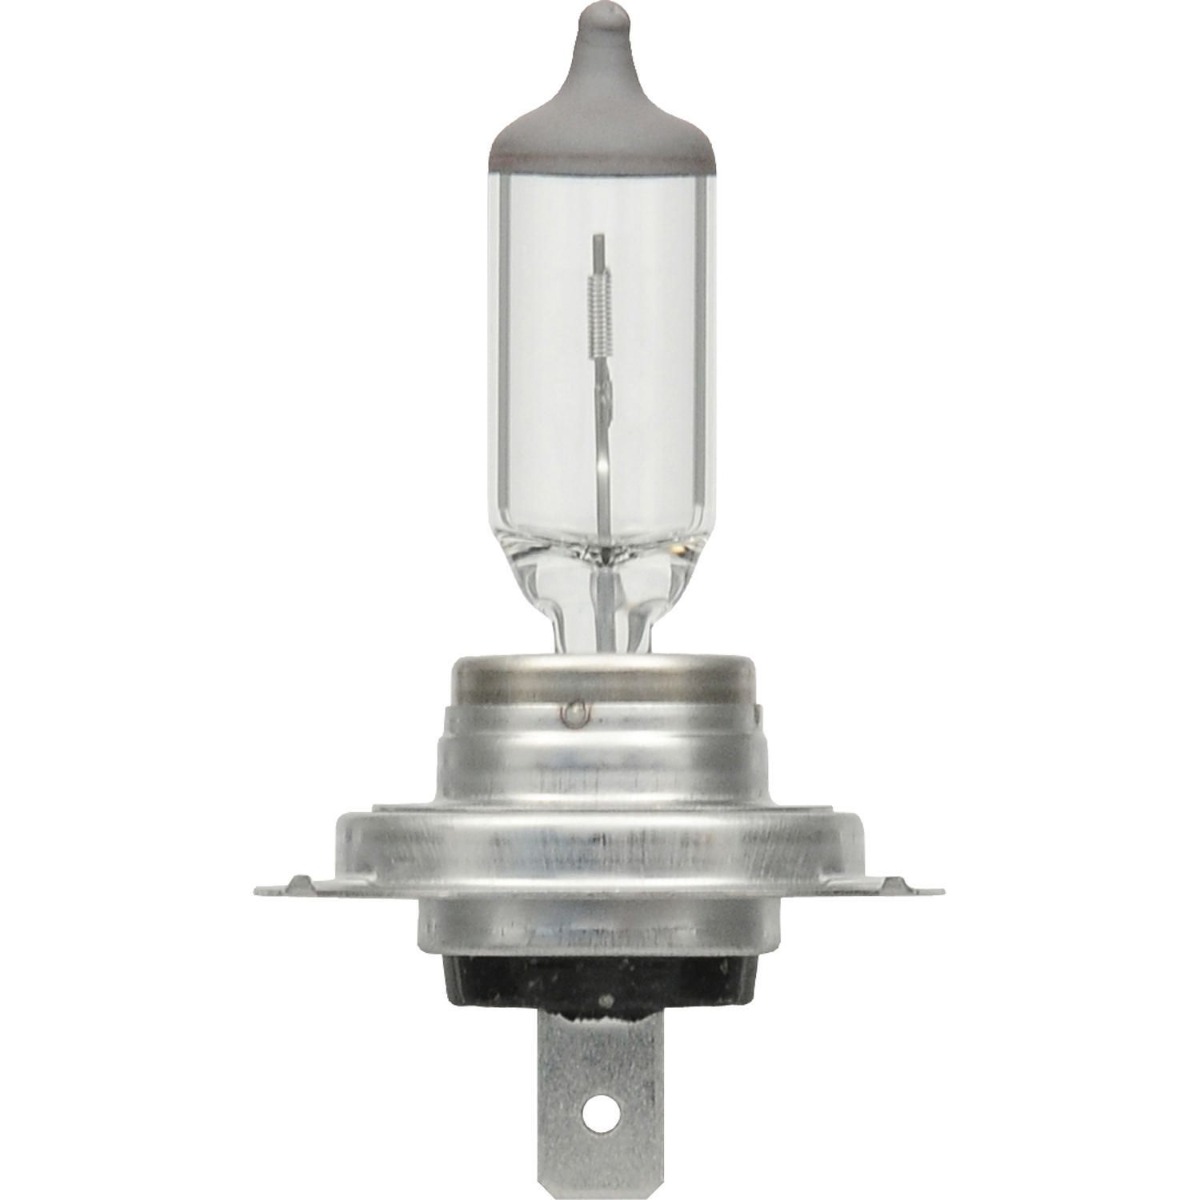 SYLVANIA H7 XtraVision Halogen Headlight Bulb (Contains 1 Bulb)